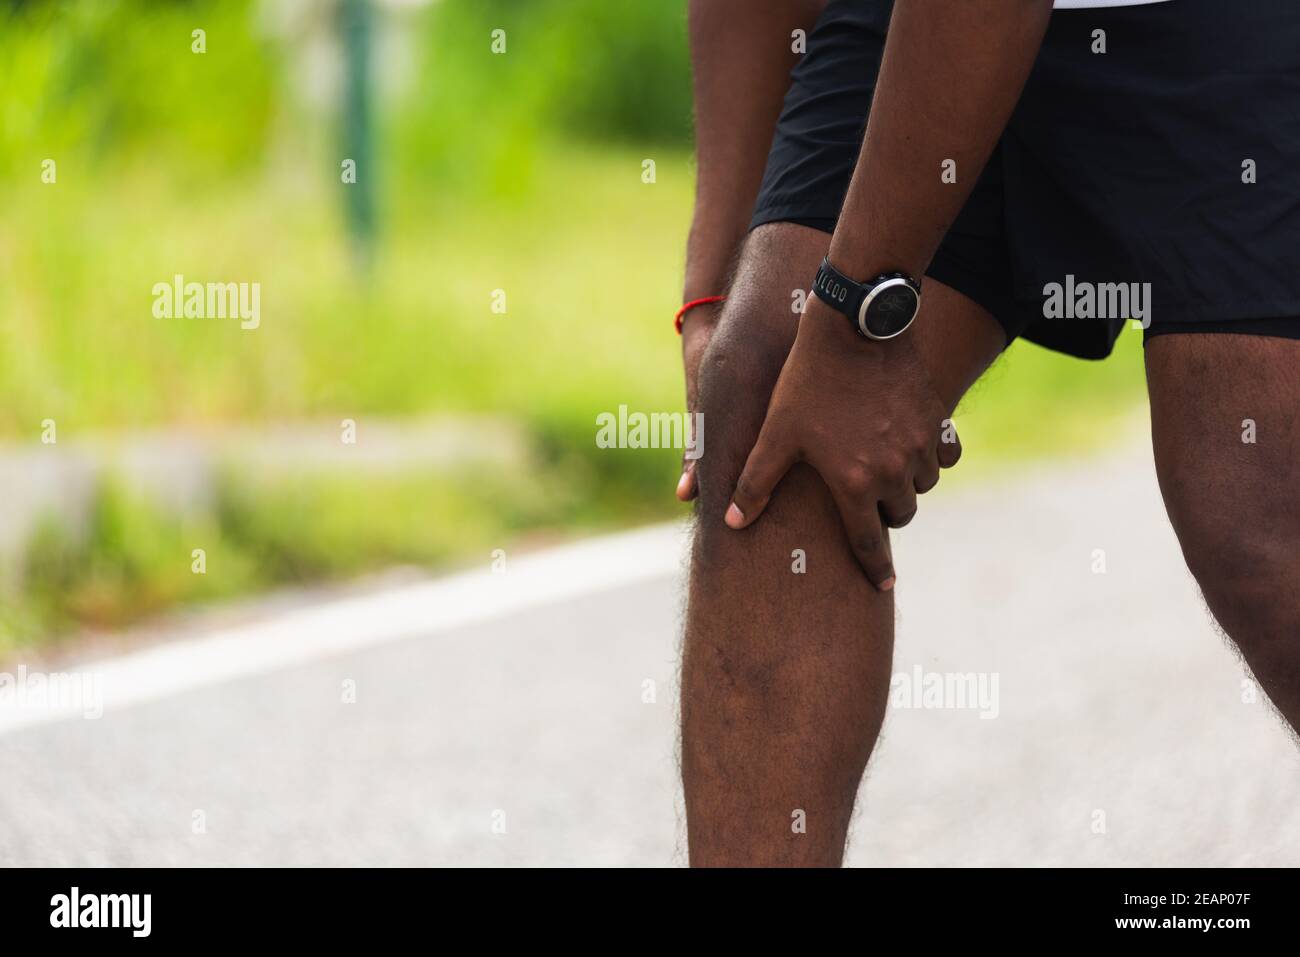 sport runner black man wear watch hands joint hold knee pain Stock Photo